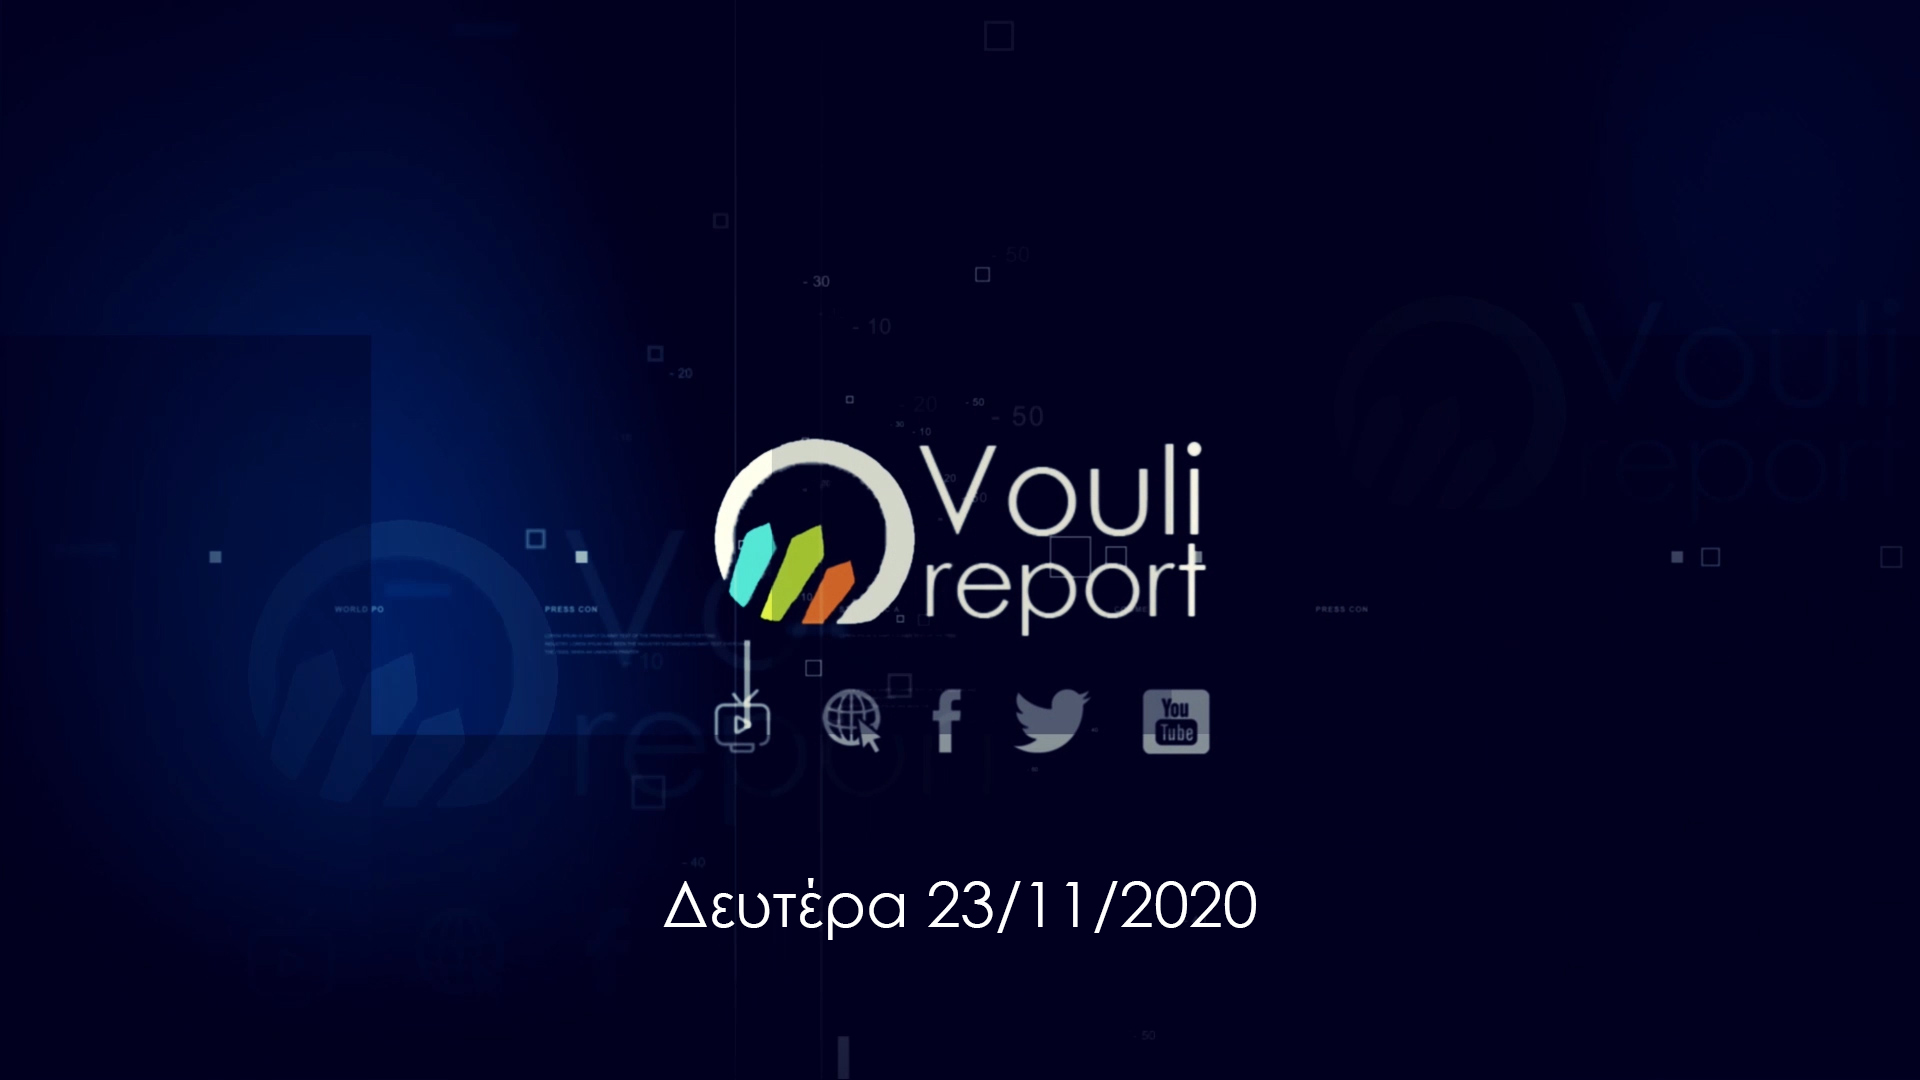 Vouli report | 23/11/2020